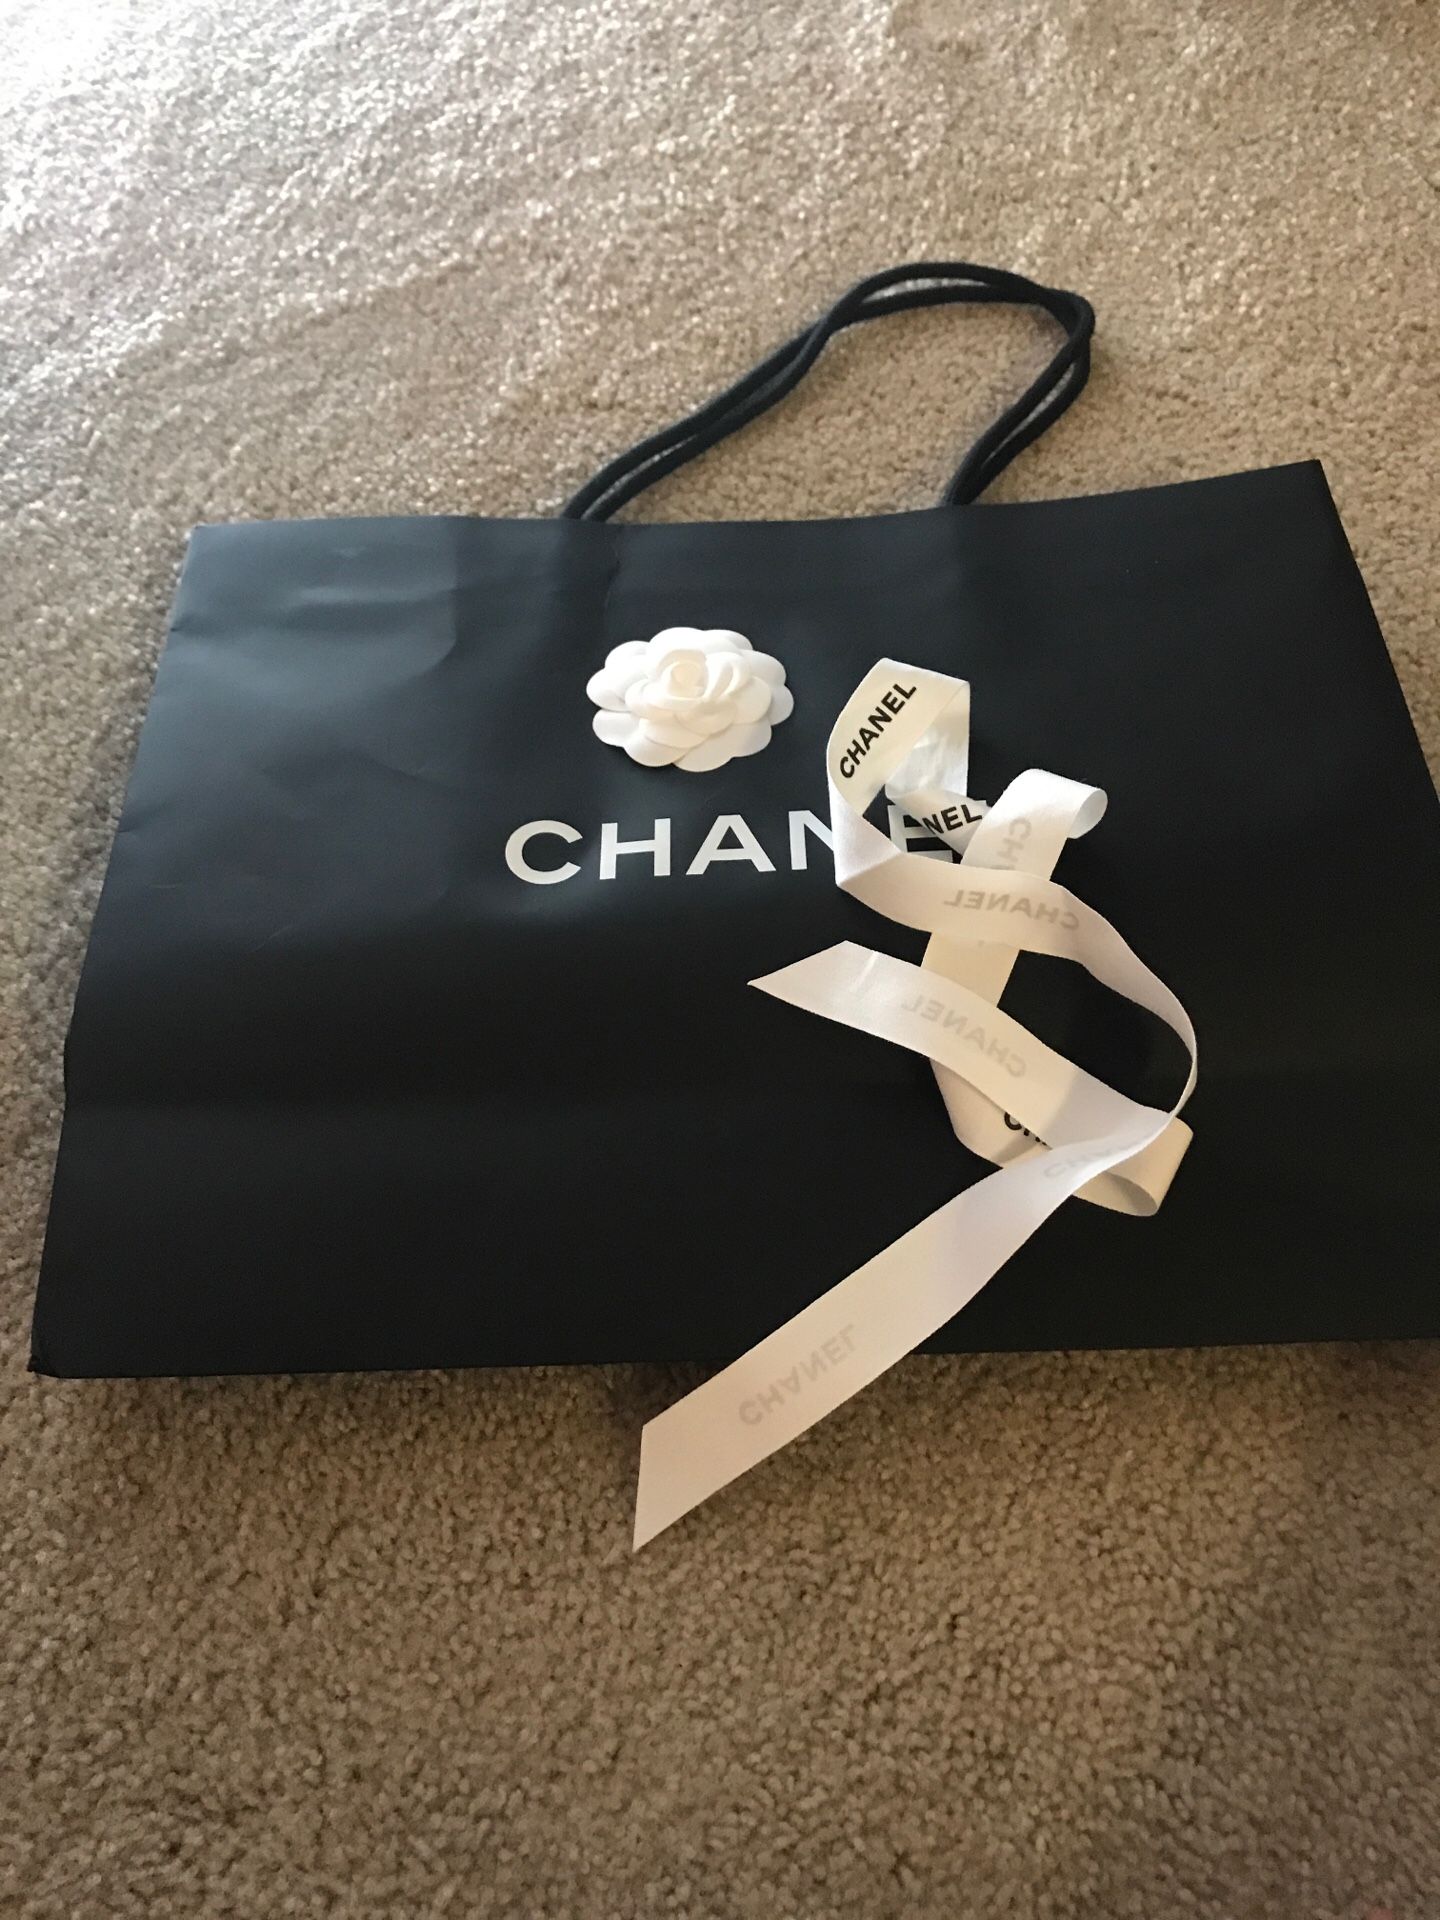 chanel led light bag